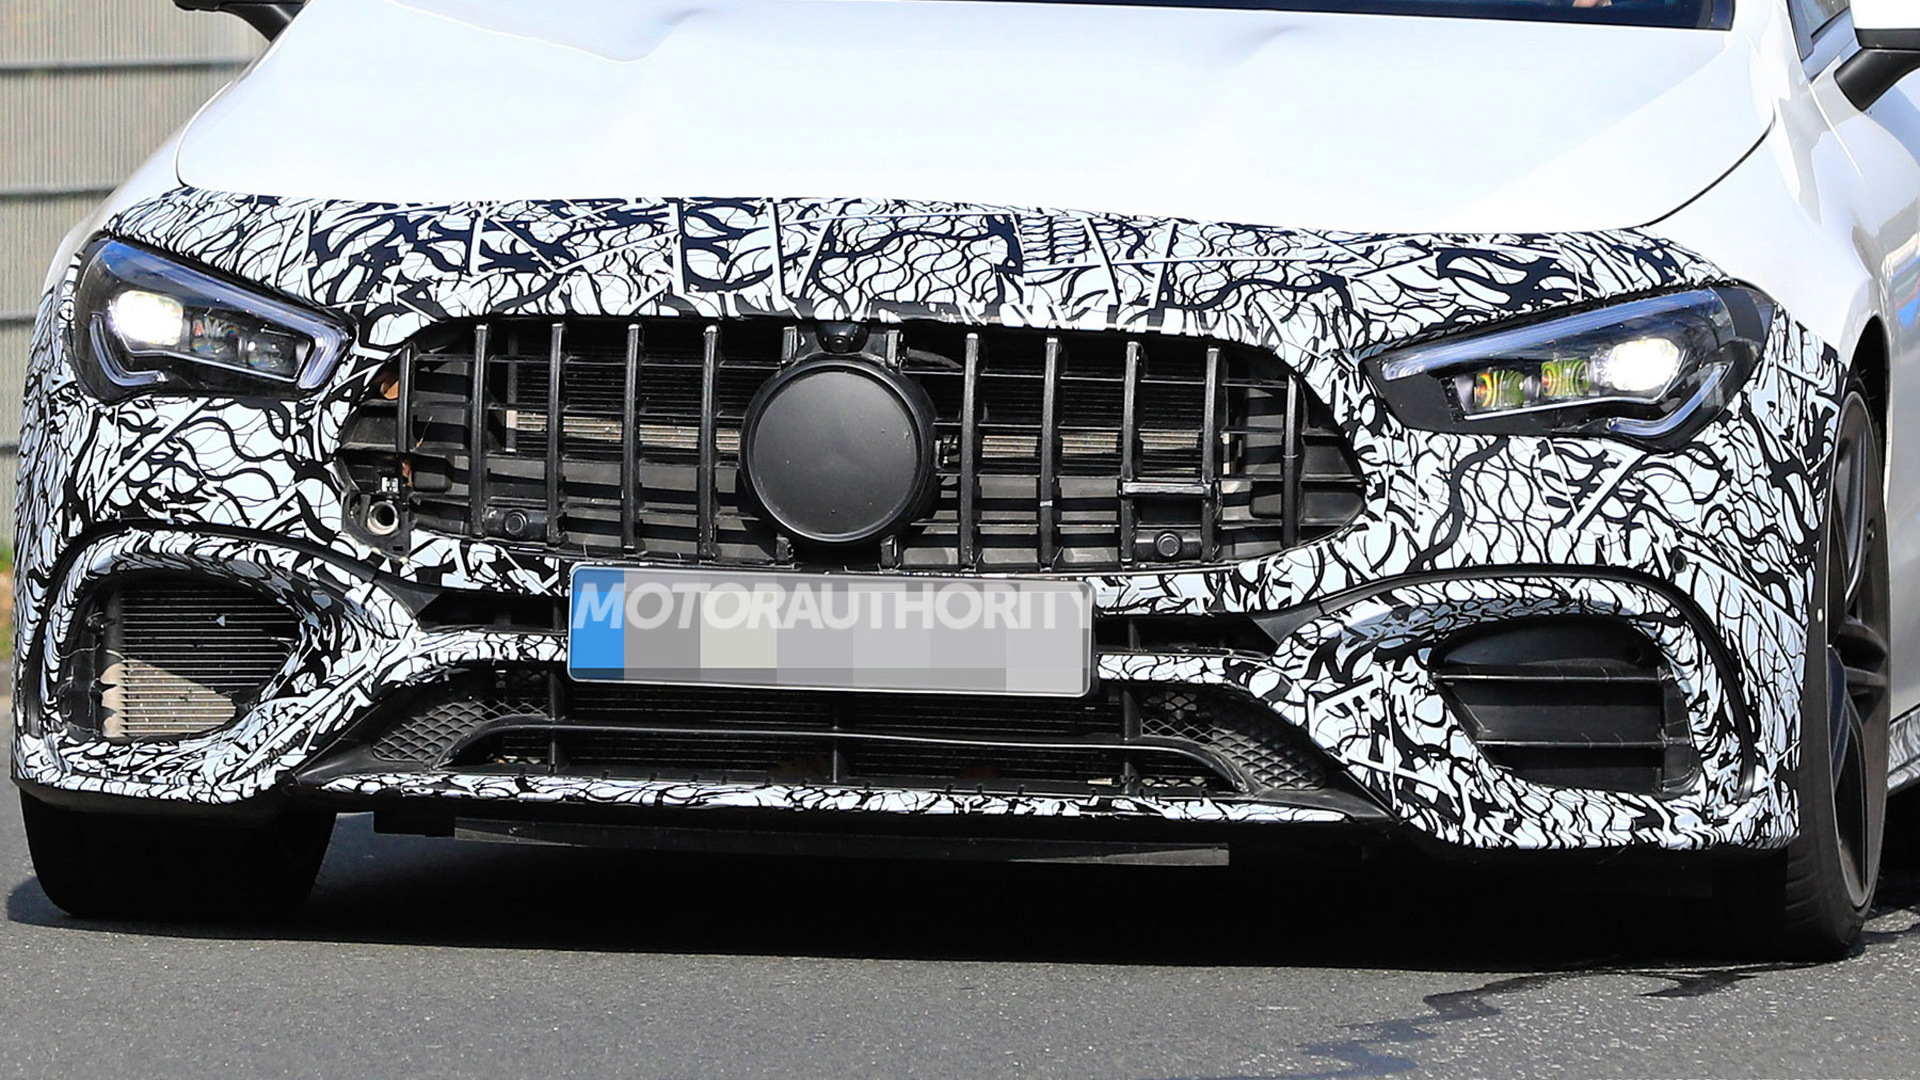 2020 Mercedes-AMG CLA45 Shooting Brake spy shots - Image via S. Baldauf/SB-Medien